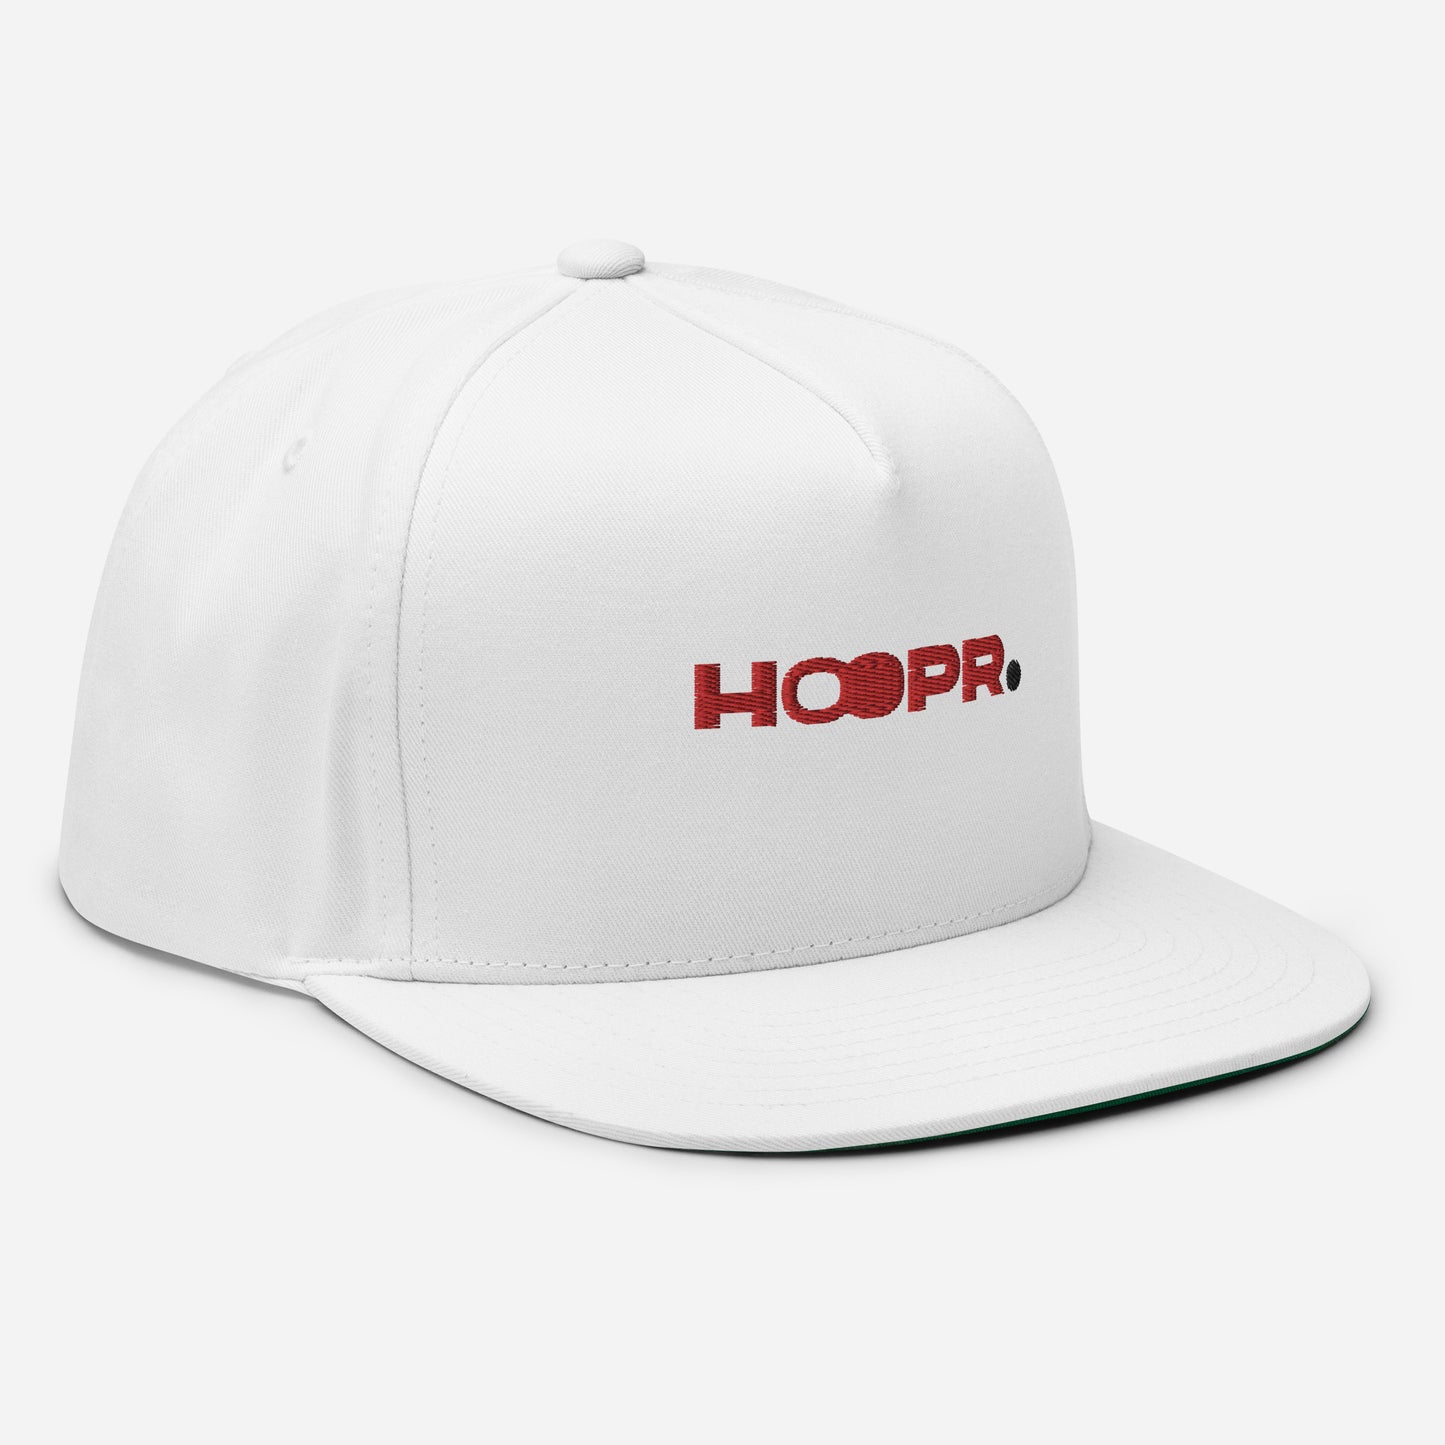 HOOPR. Signature 5 Panel Cap